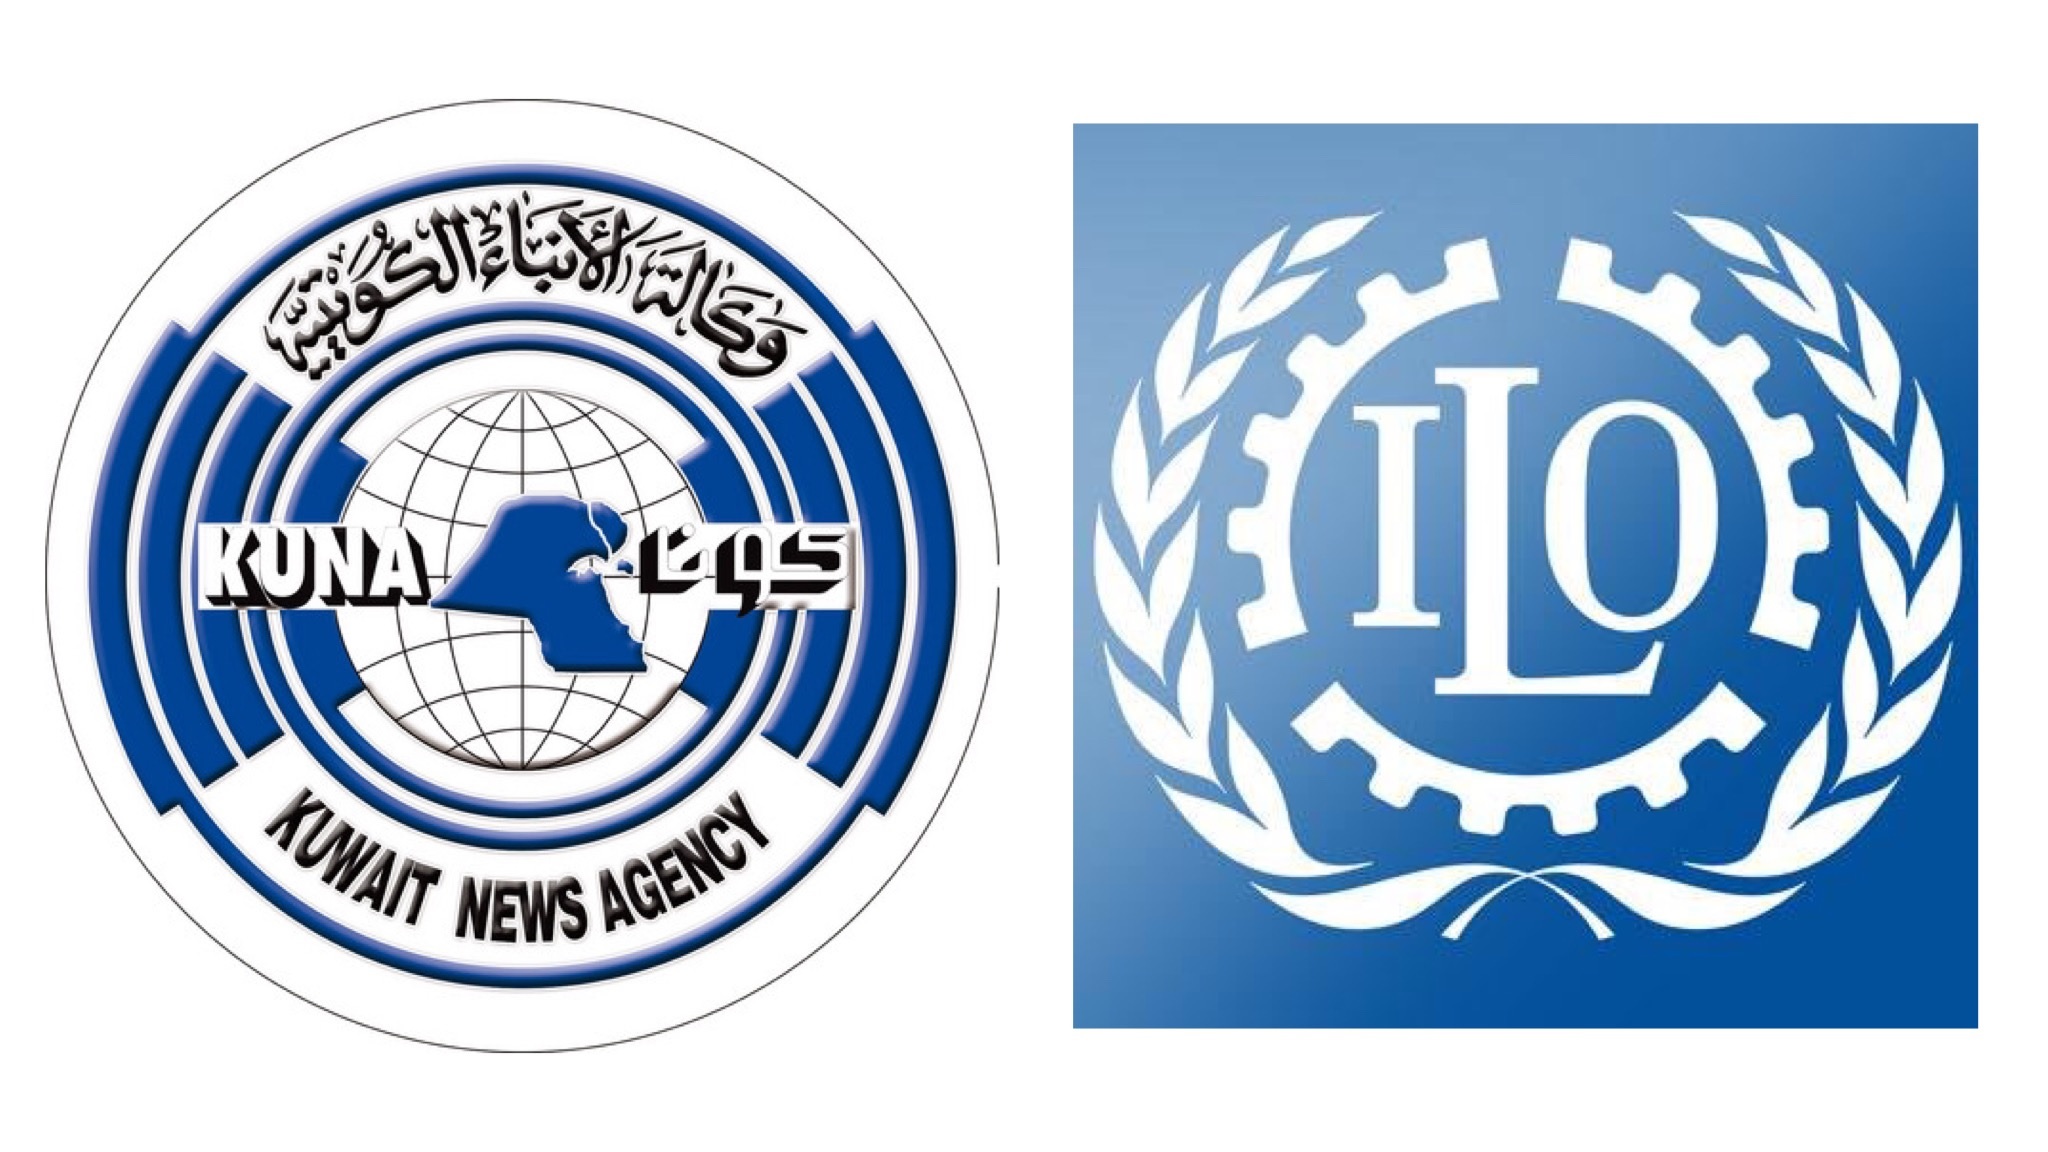 The International Labor Organization (ILO)  and Kuwait News Agency (KUNA)